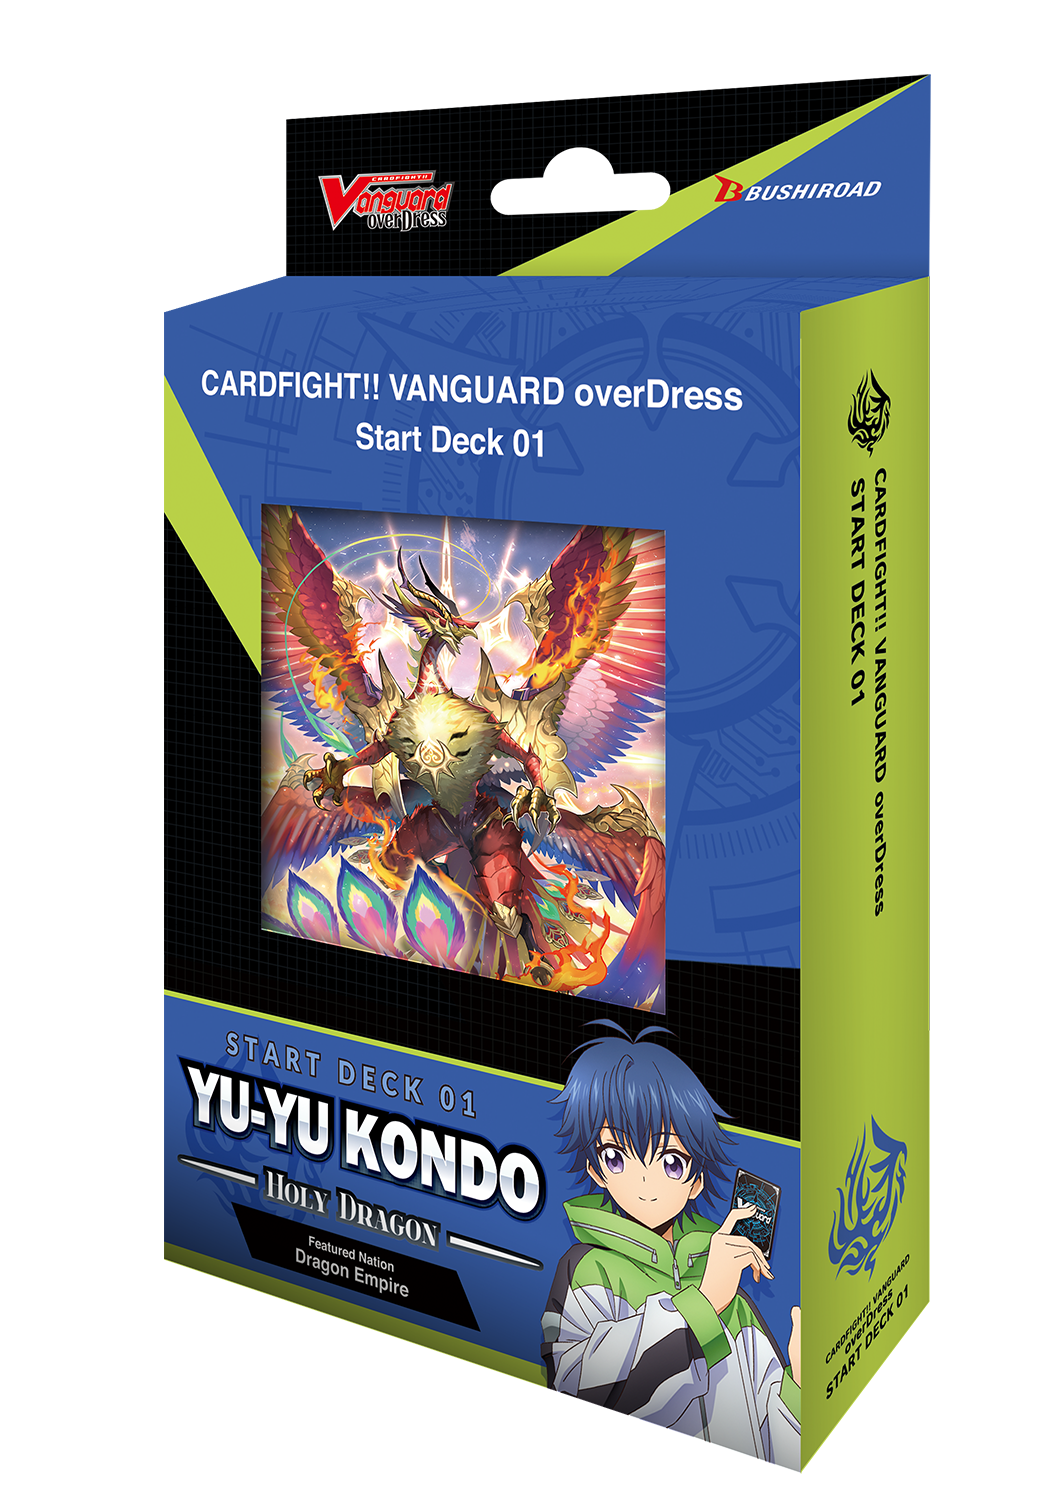 Vanguard Yuyu Kondo [Holy Dragon] Start Deck